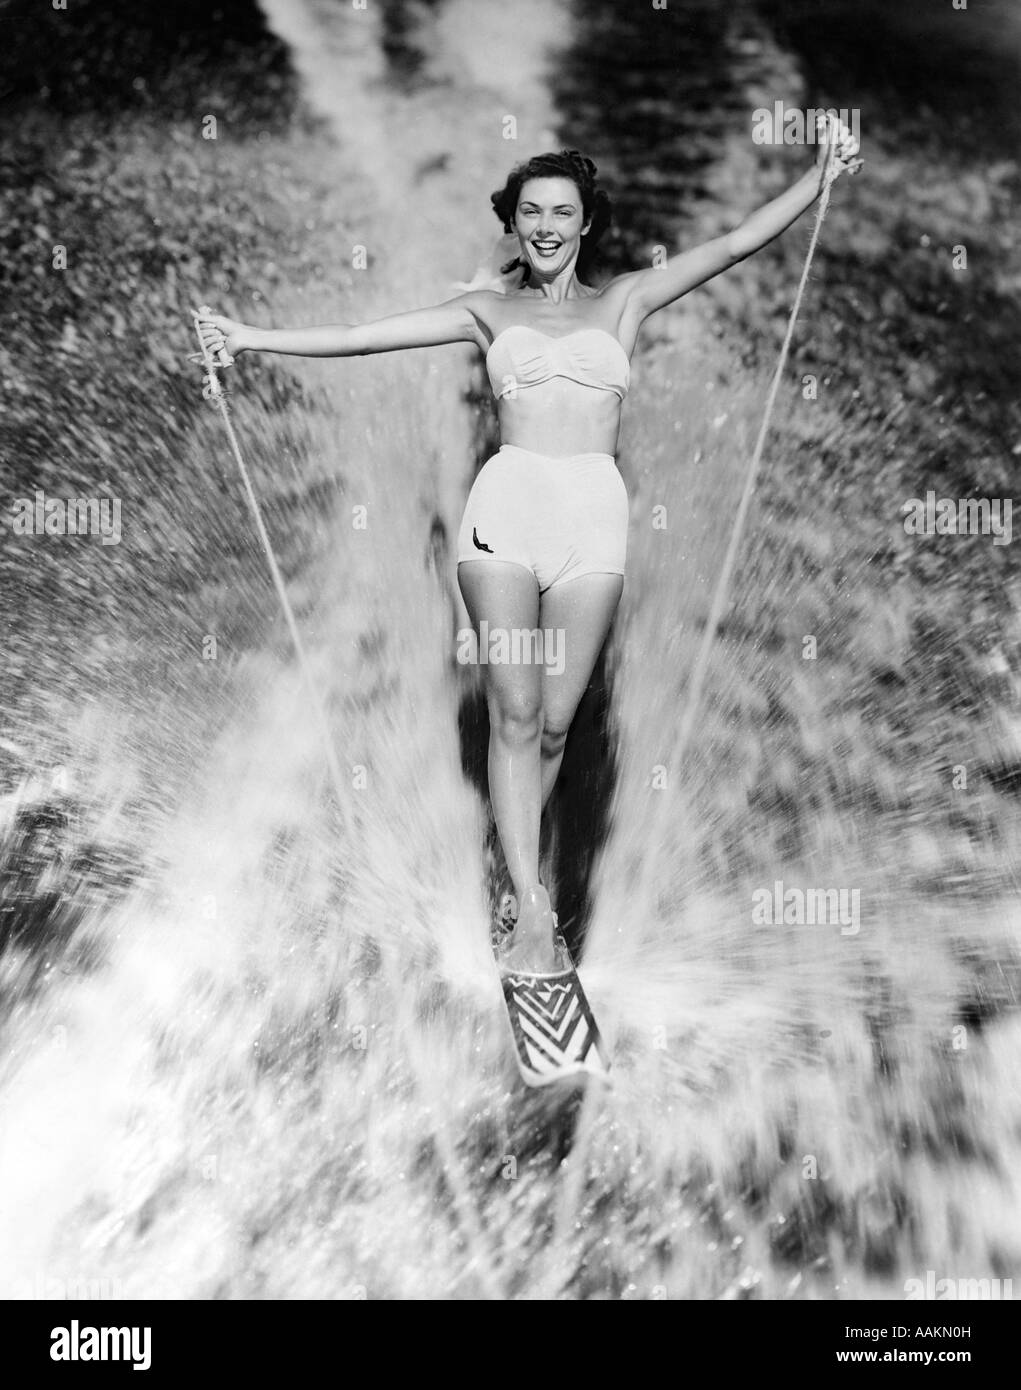 1950 SMILING WOMAN IN WHITE maillot deux pièces l'aquaplanage LE SKI NAUTIQUE LOOKING AT CAMERA Banque D'Images